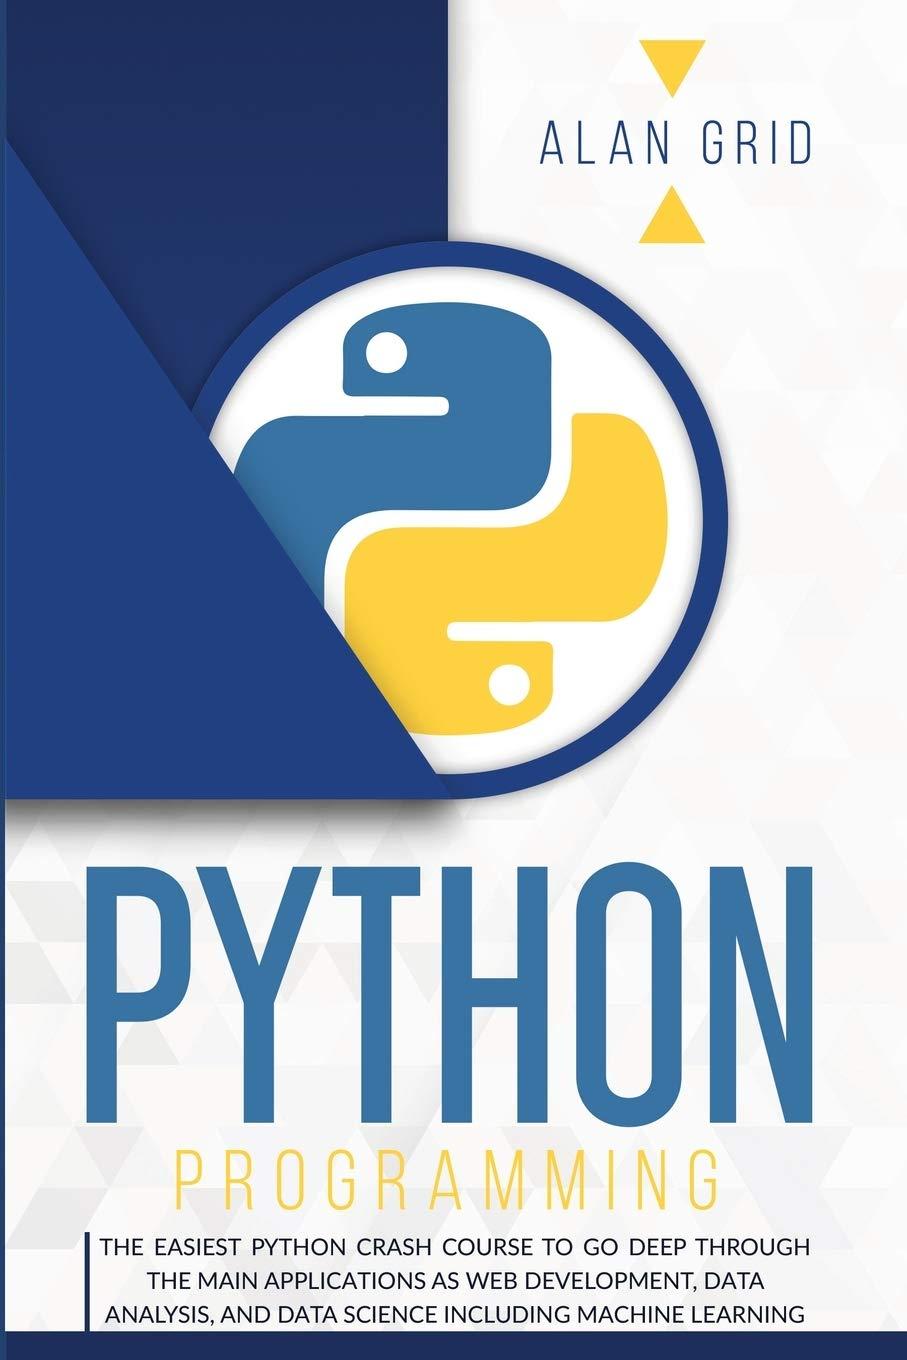 python programming the easiest python crash course to go deep through the main applications as web